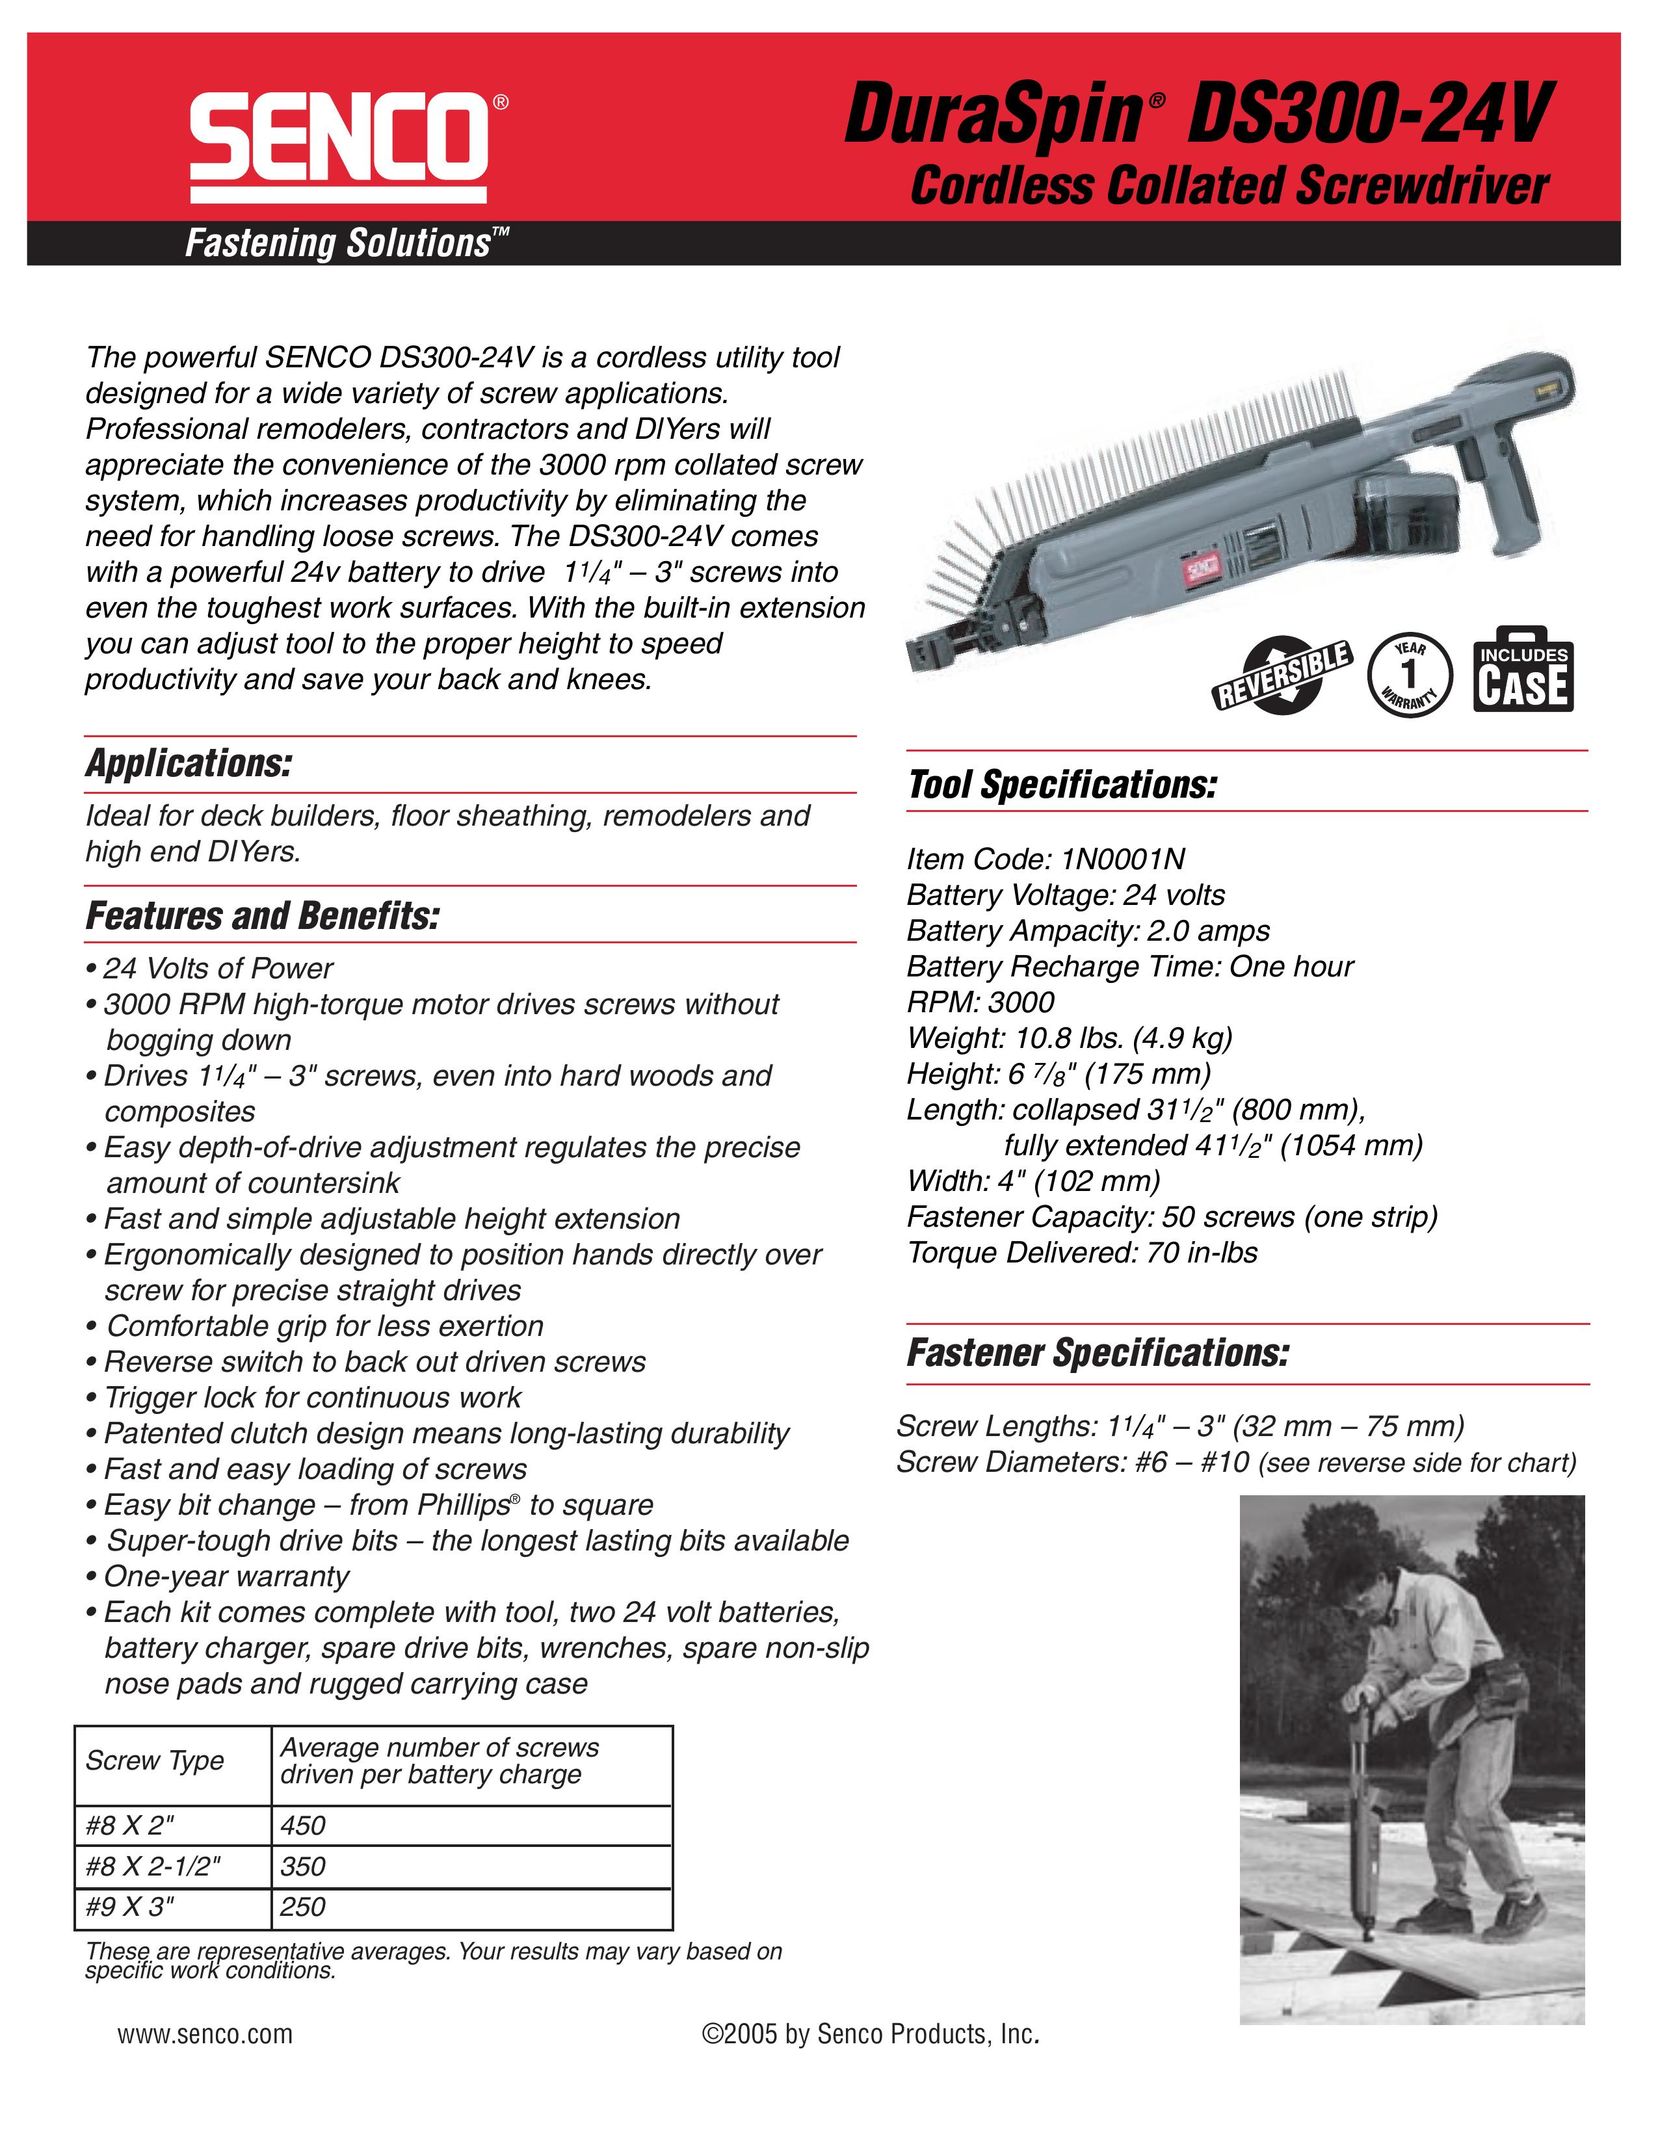 Senco DS300-24V Power Screwdriver User Manual